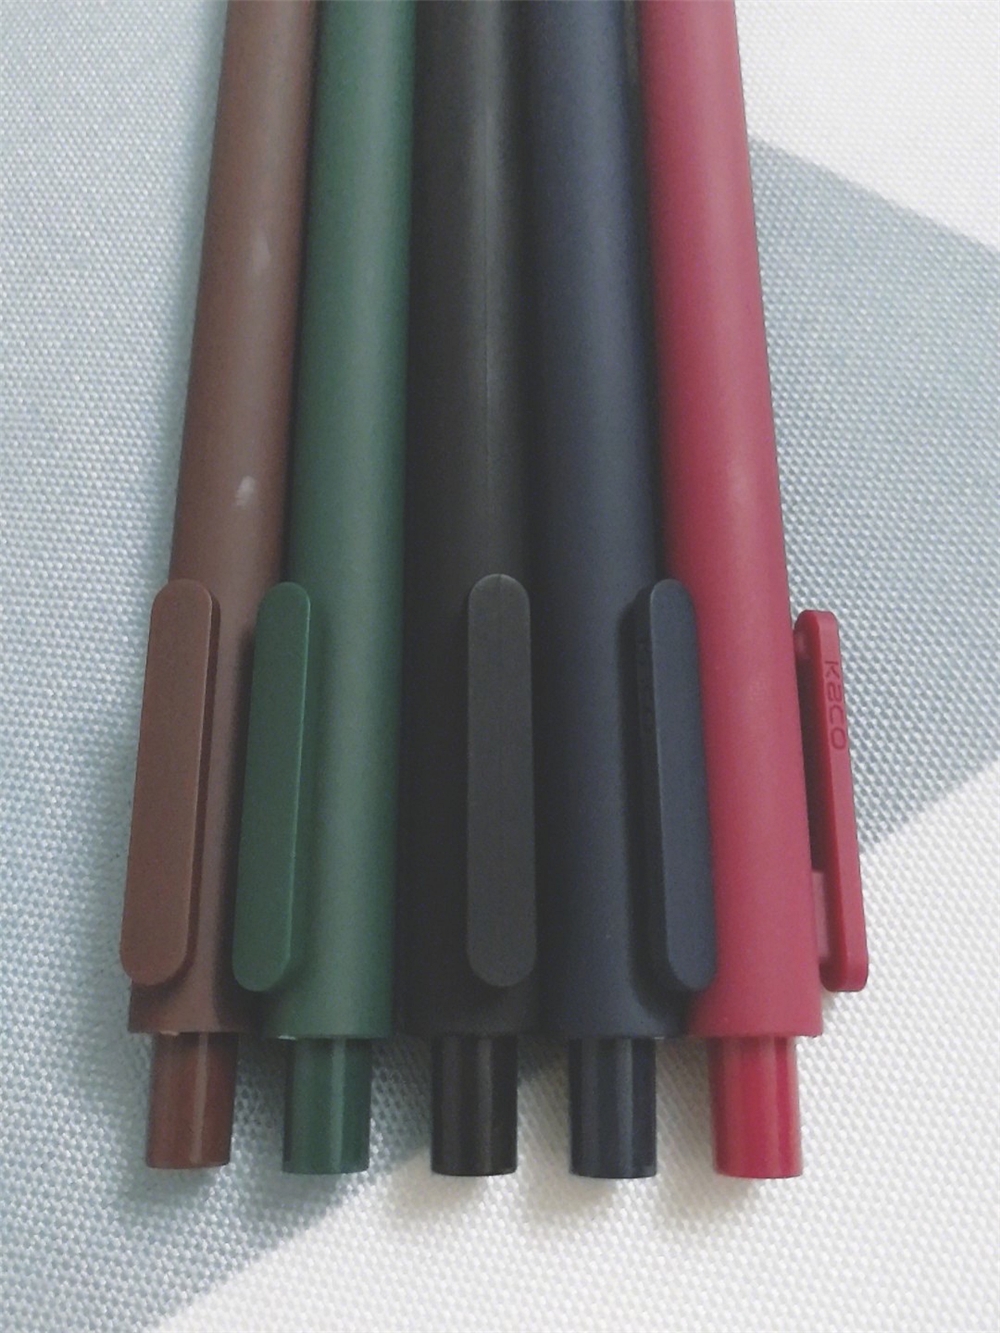 KACO 创意复古5色中性笔组合